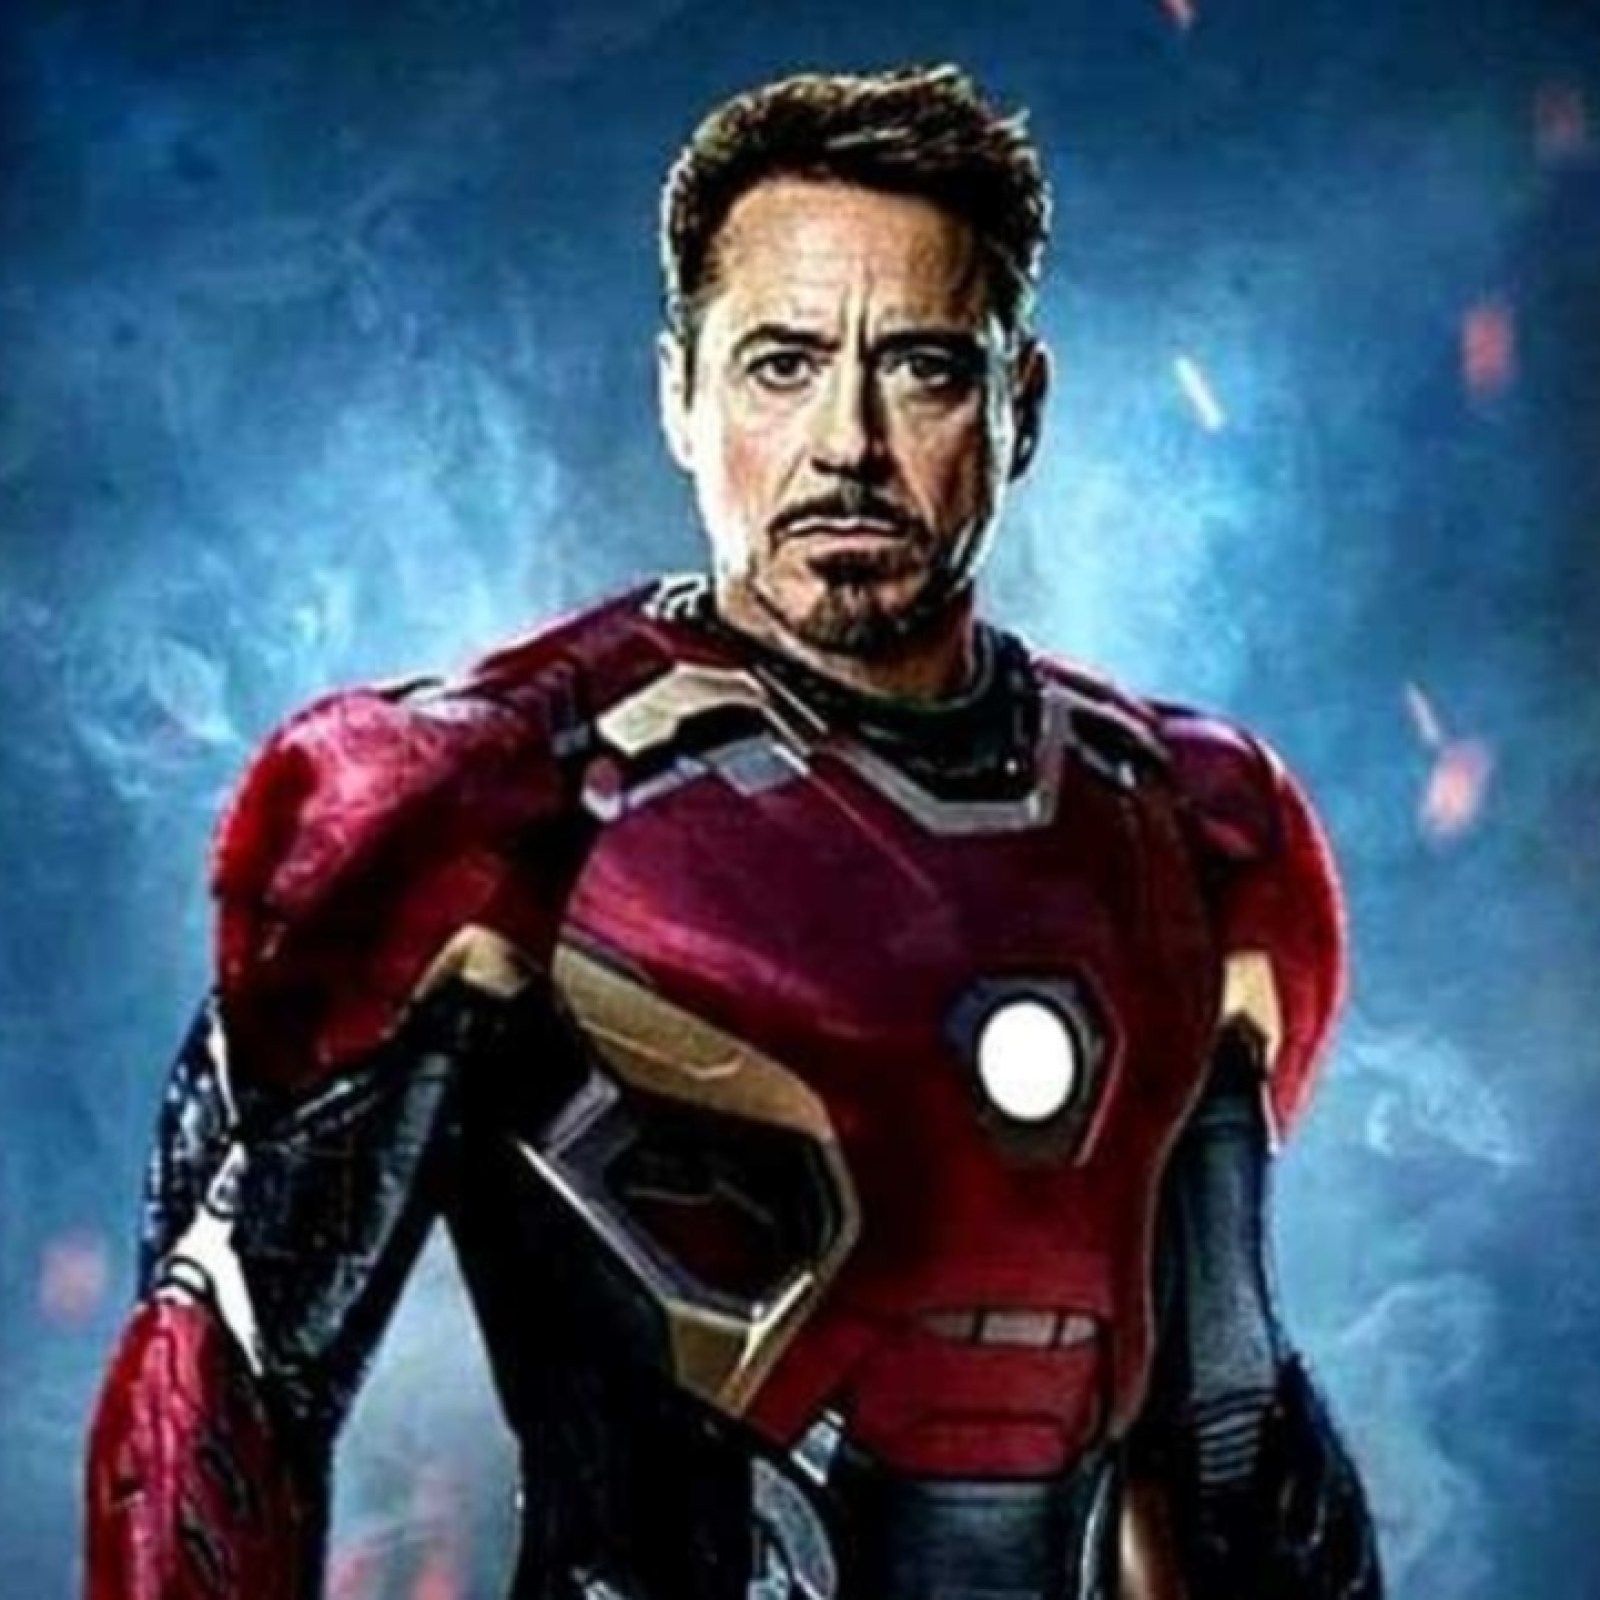 Tony Stark Is Not Voiced Robert Downey Jr. 'What